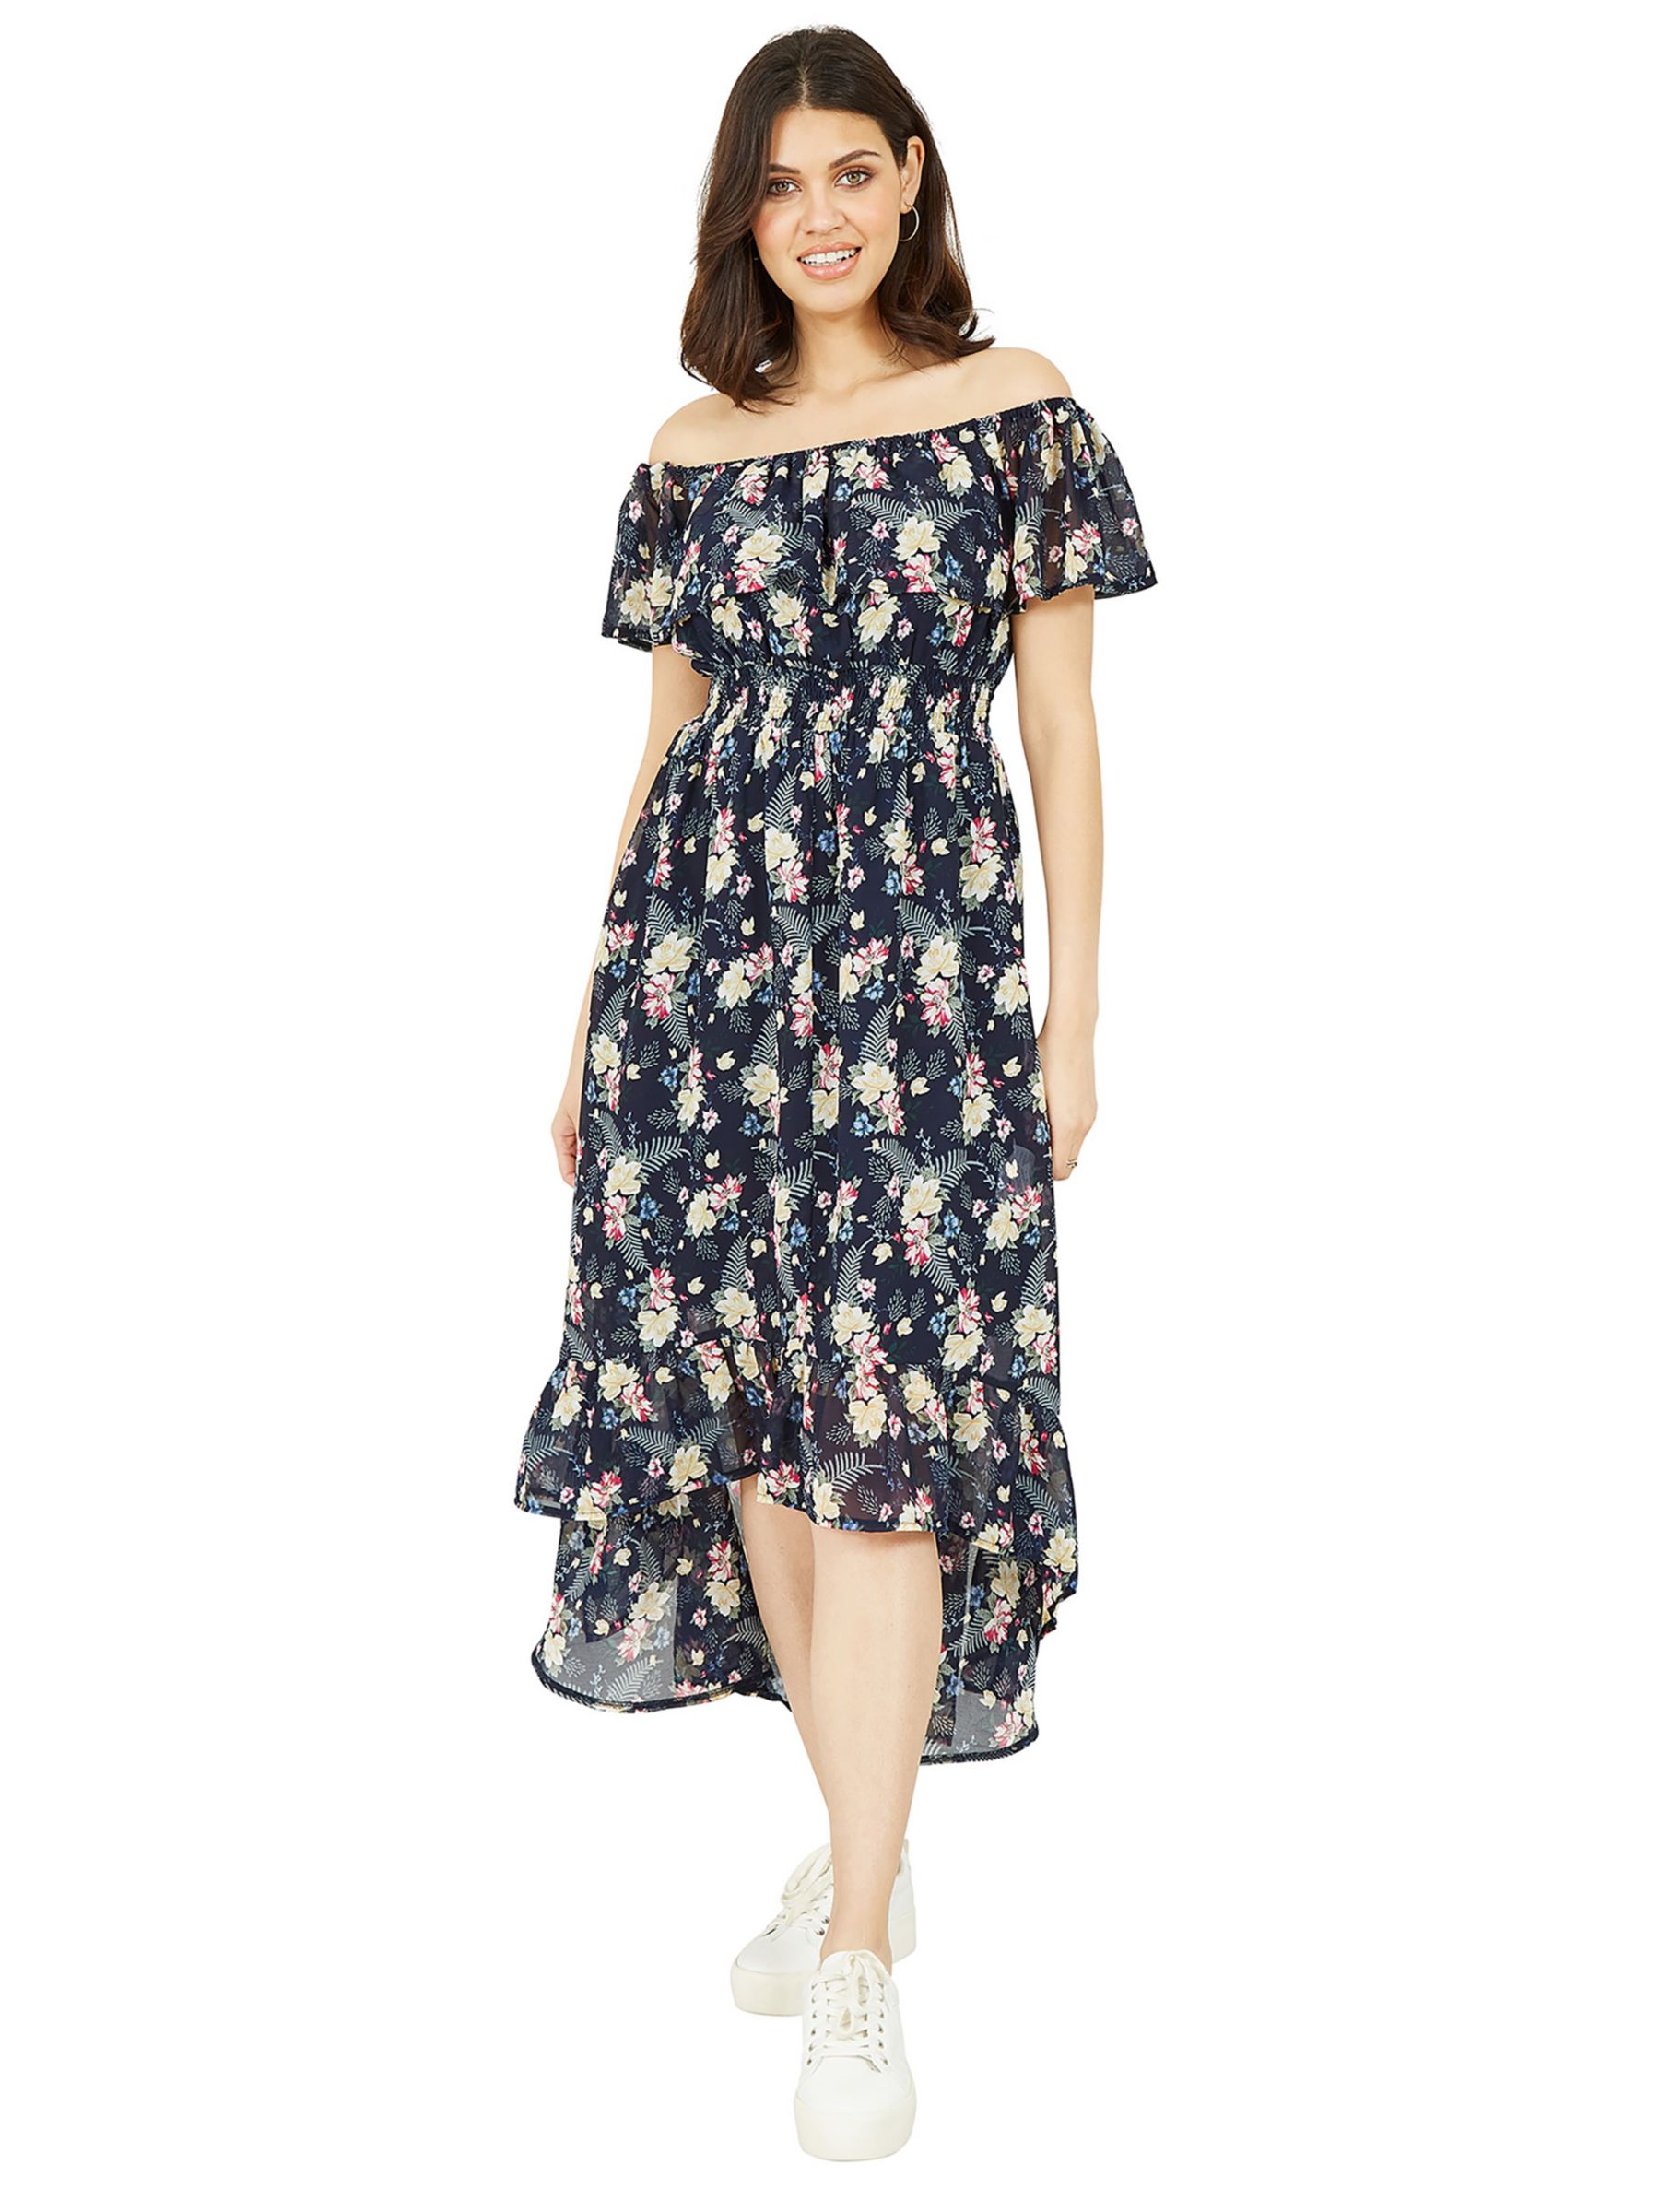 Mela London Tropical Print Dip Hem Bardot Midi Dress, Navy/Multi, 8